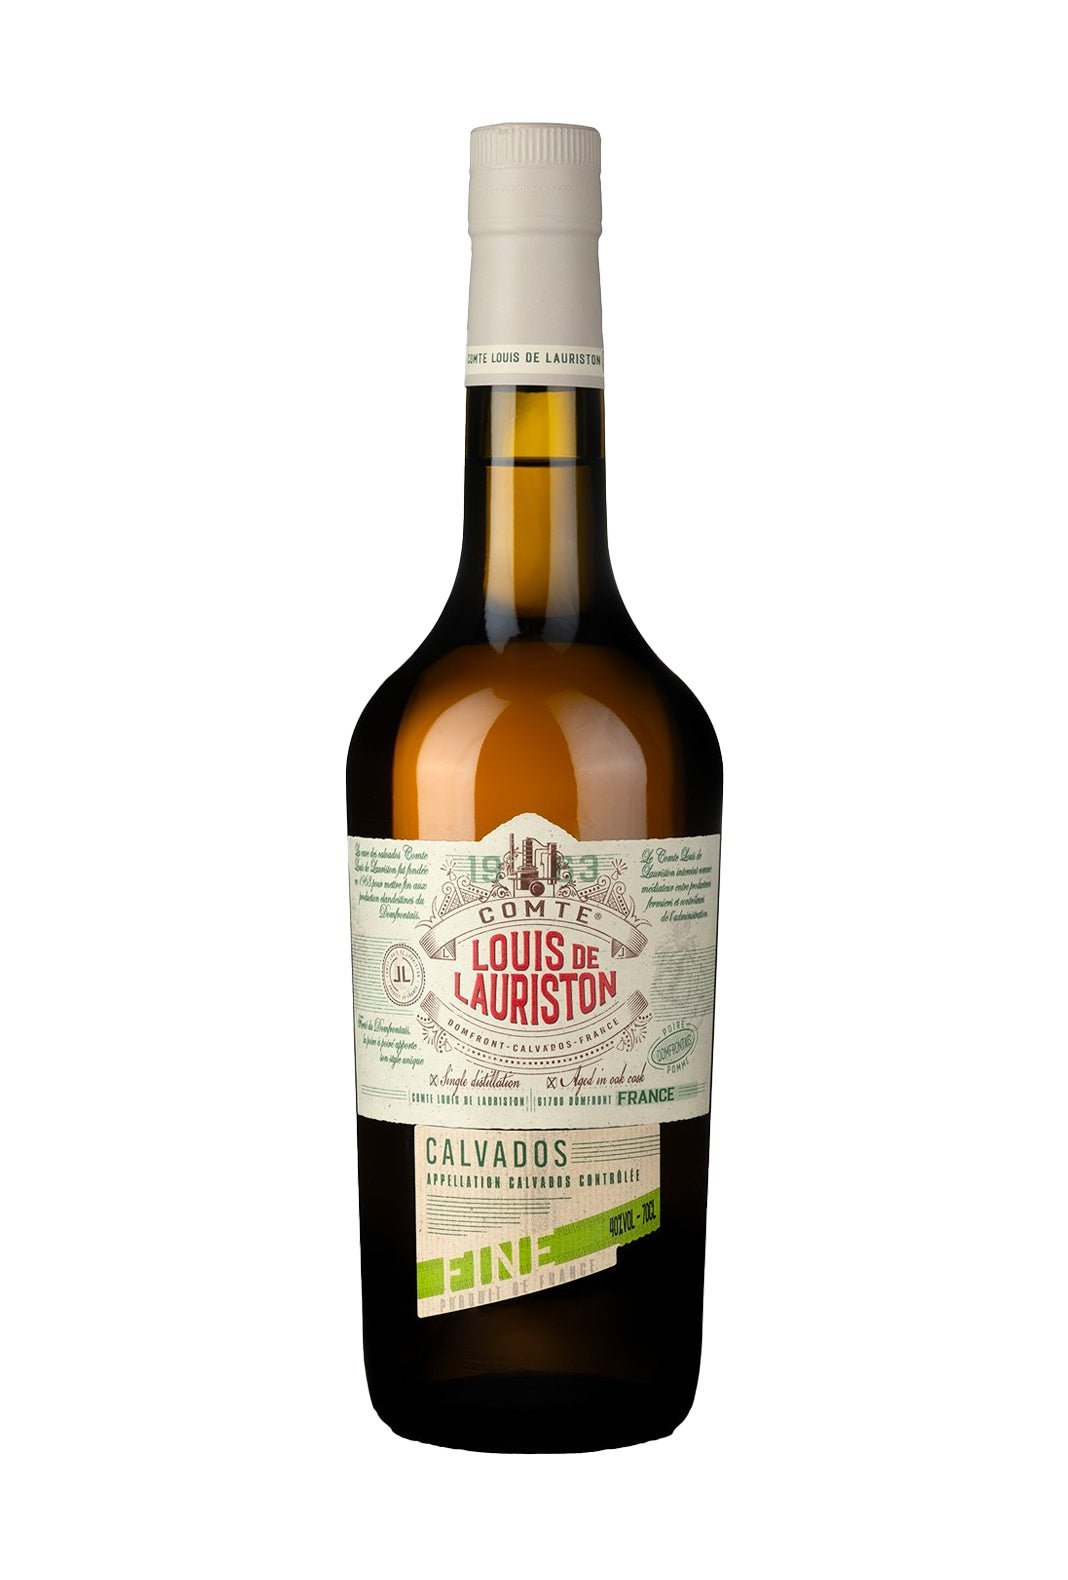 Comte Louis de Lauriston Calvados Domfrontais Fine 2 years 40% 700ml | Brandy | Shop online at Spirits of France